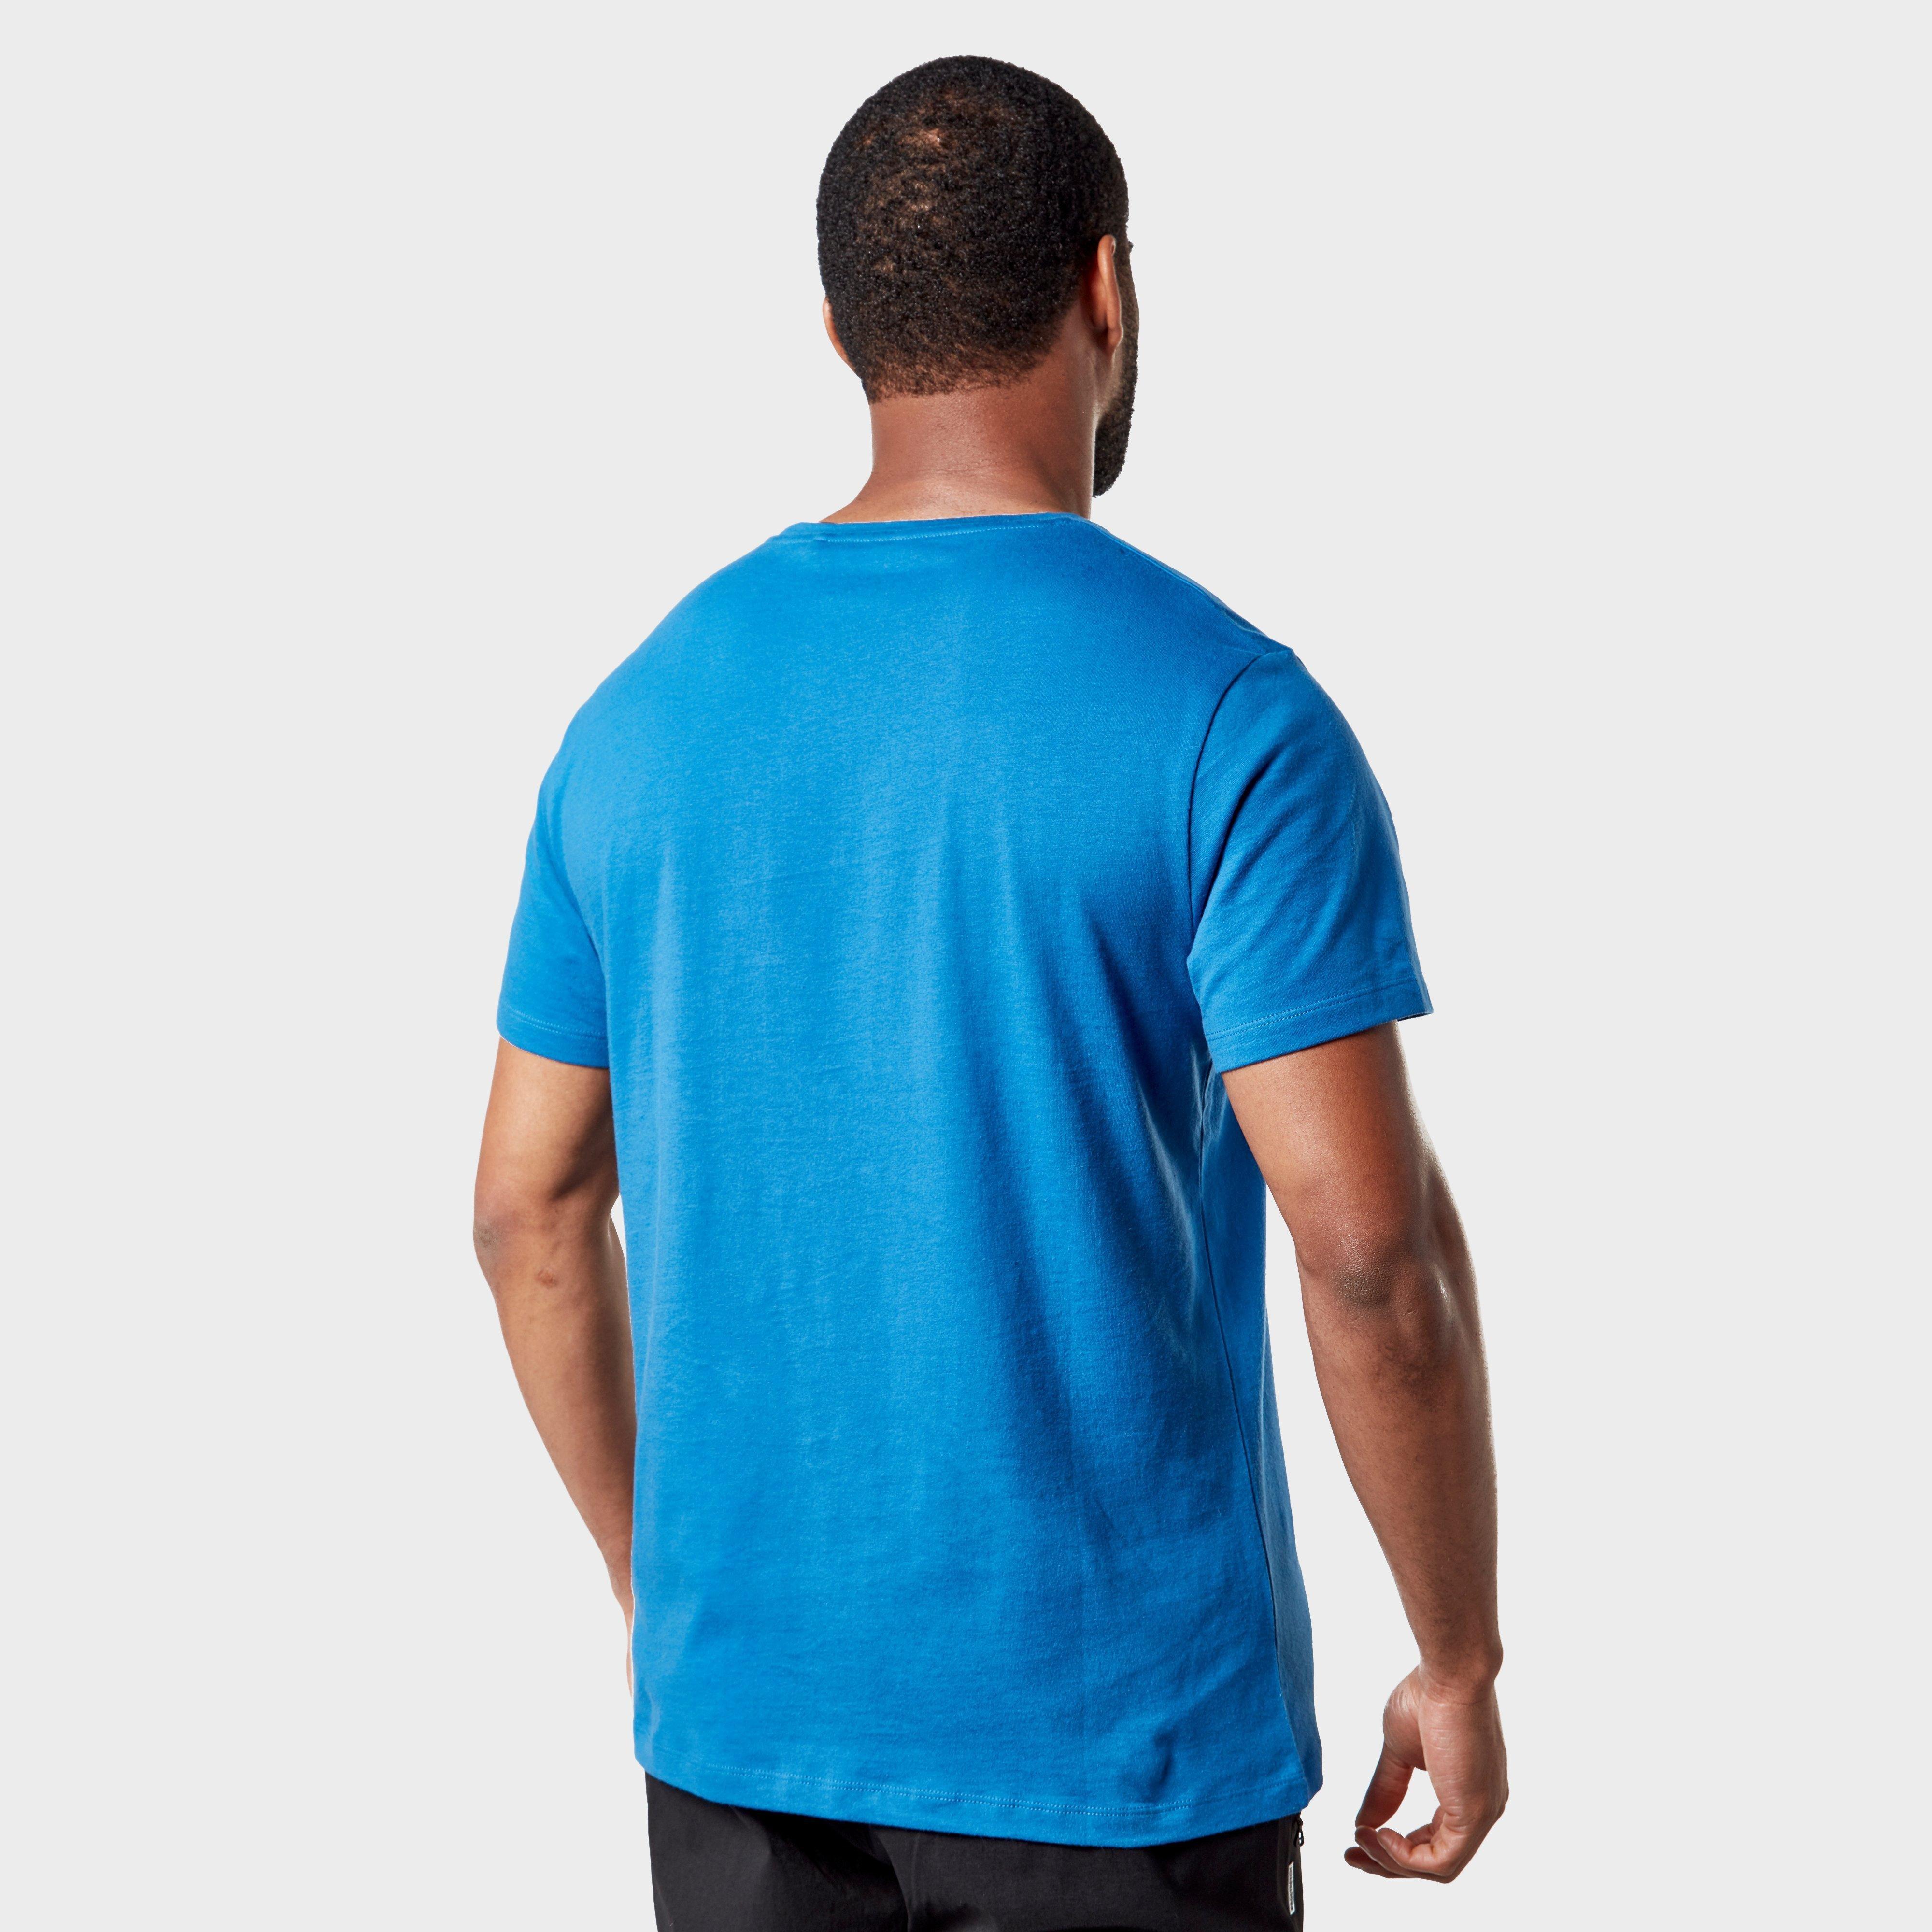 Craghoppers Men's Calvino Short Sleeve T-Shirt Review